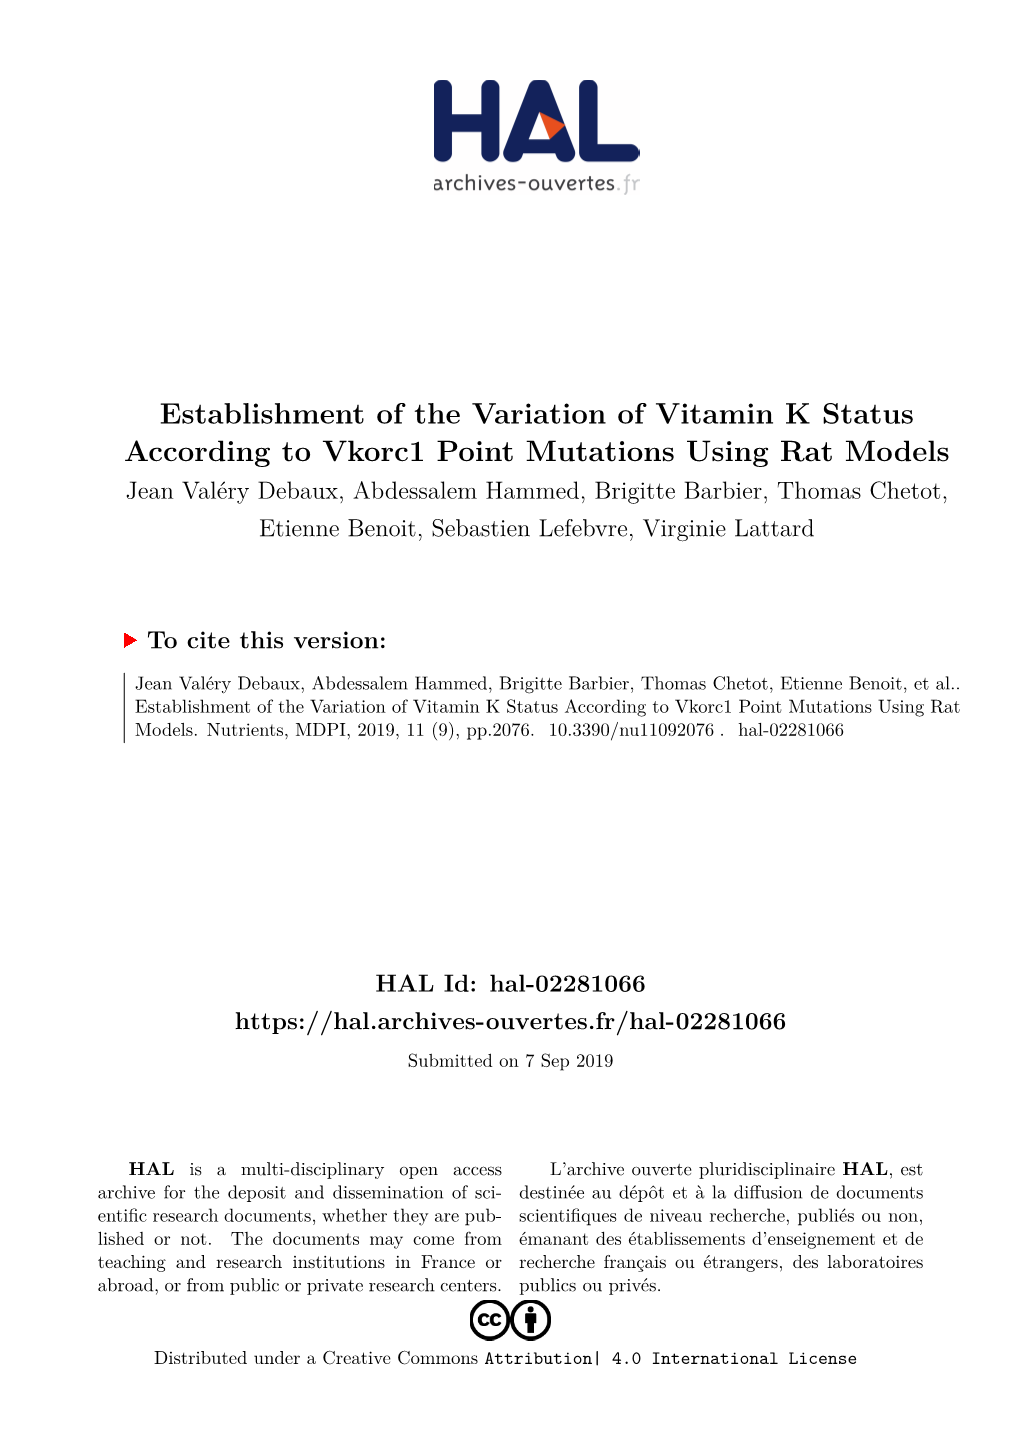 Establishment of the Variation of Vitamin K Status According to Vkorc1 Point Mutations Using Rat Models